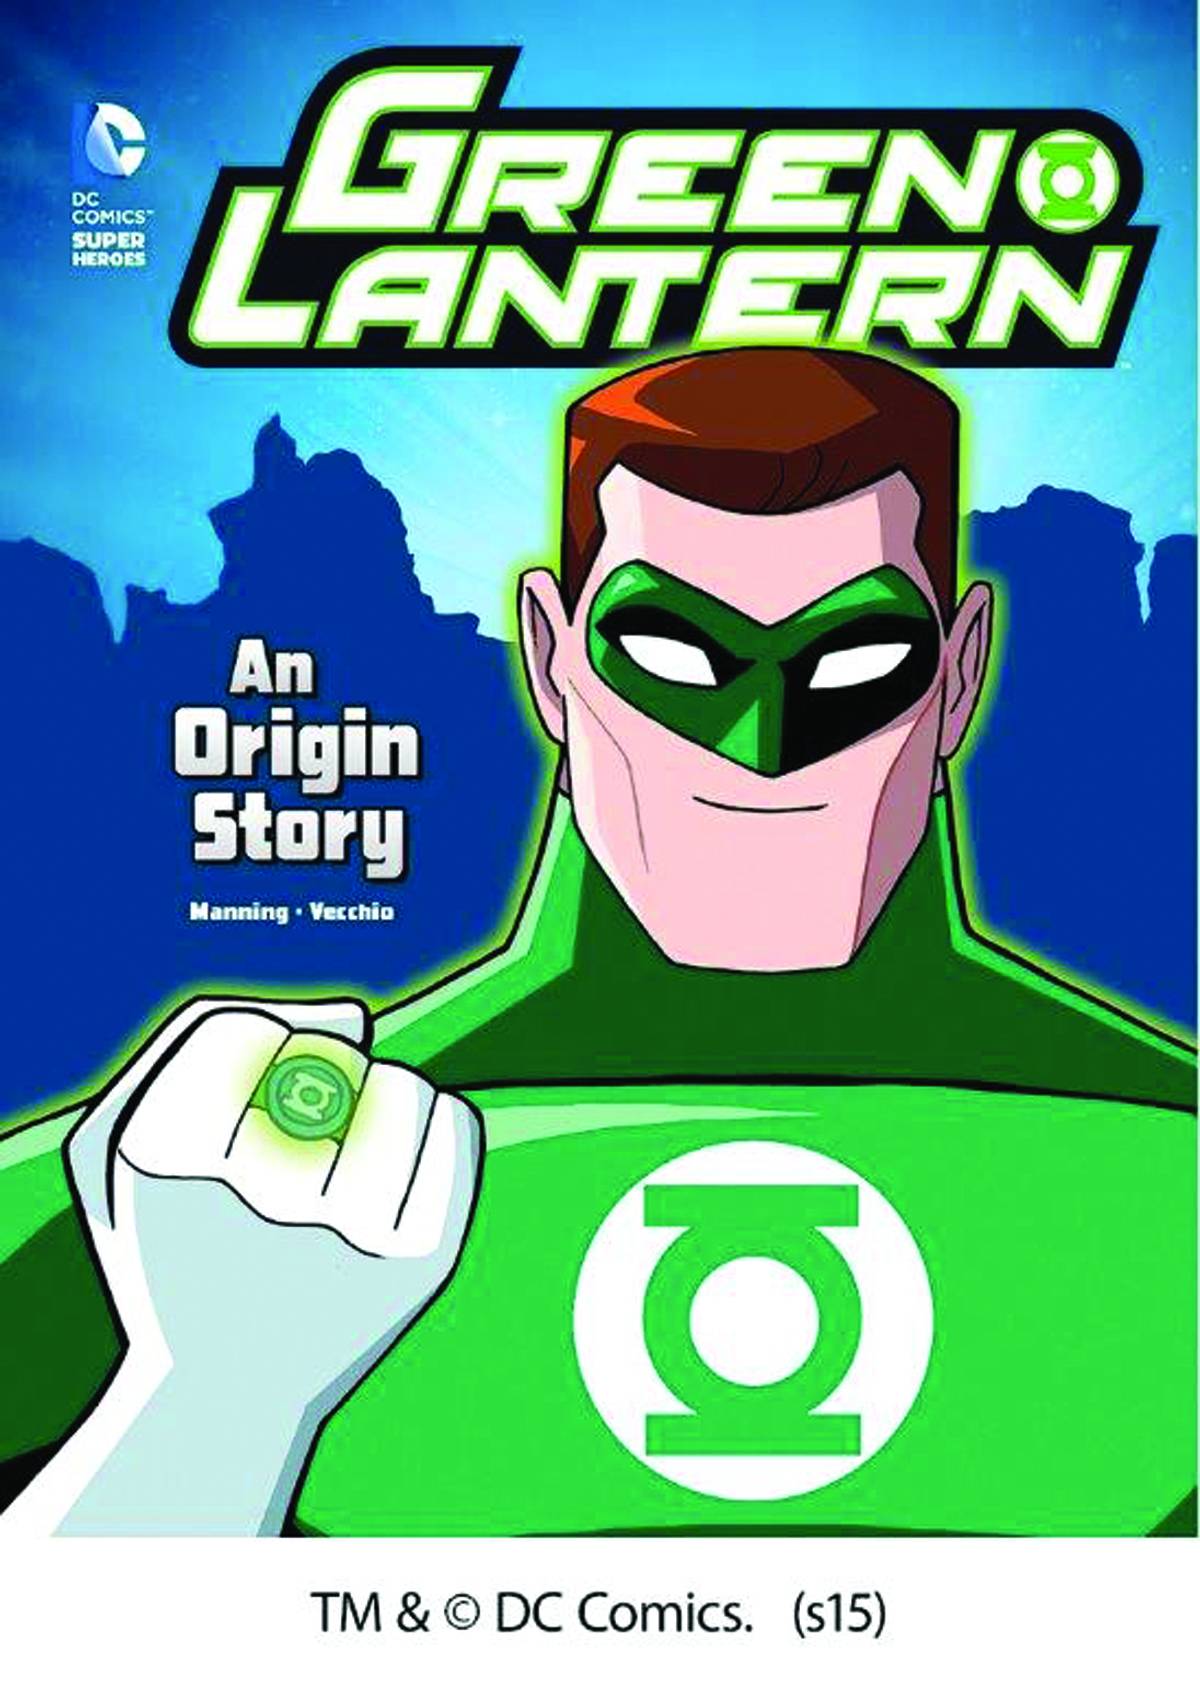 DC Super Heroes Origins Young Reader Graphic Novel #4 Green Lantern